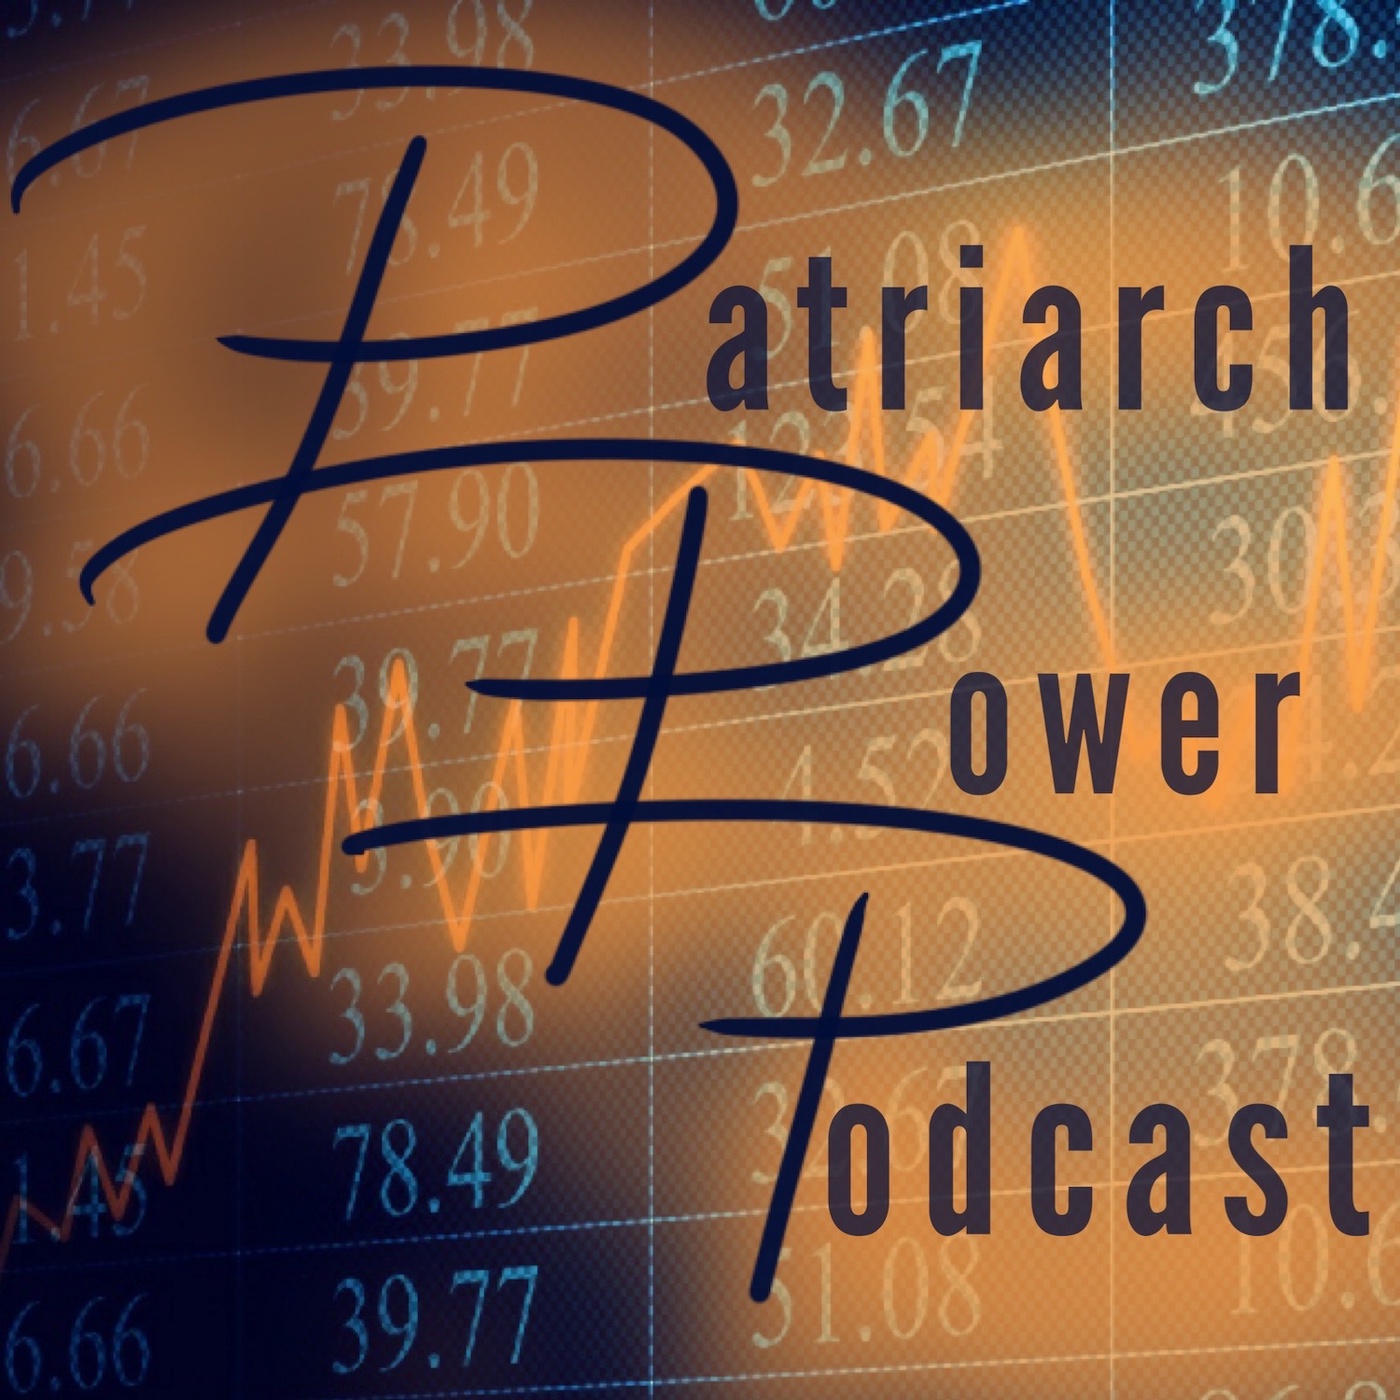 Patriarch Power Podcast